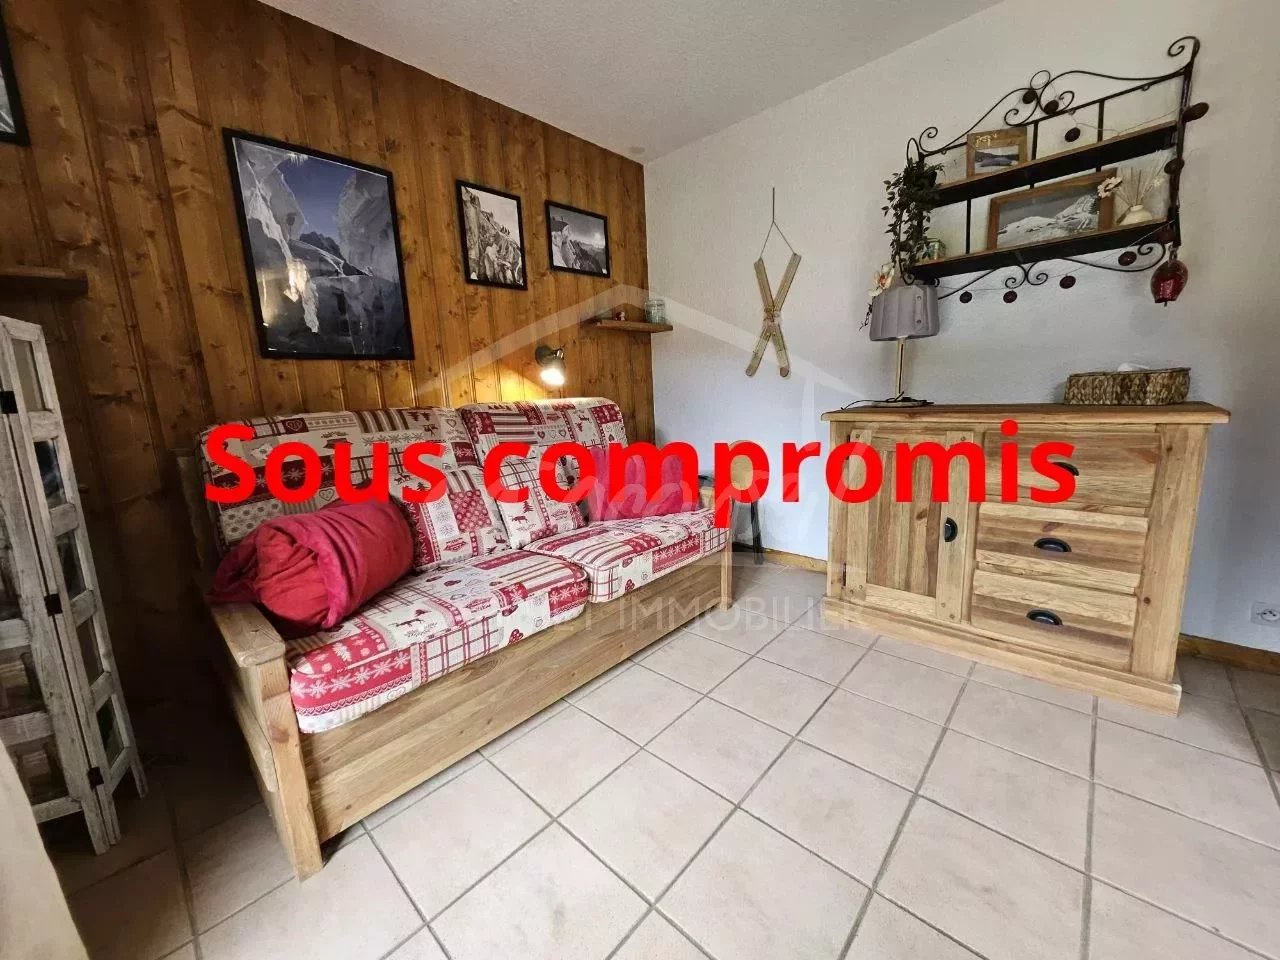 Sale Apartment - Les Contamines-Montjoie